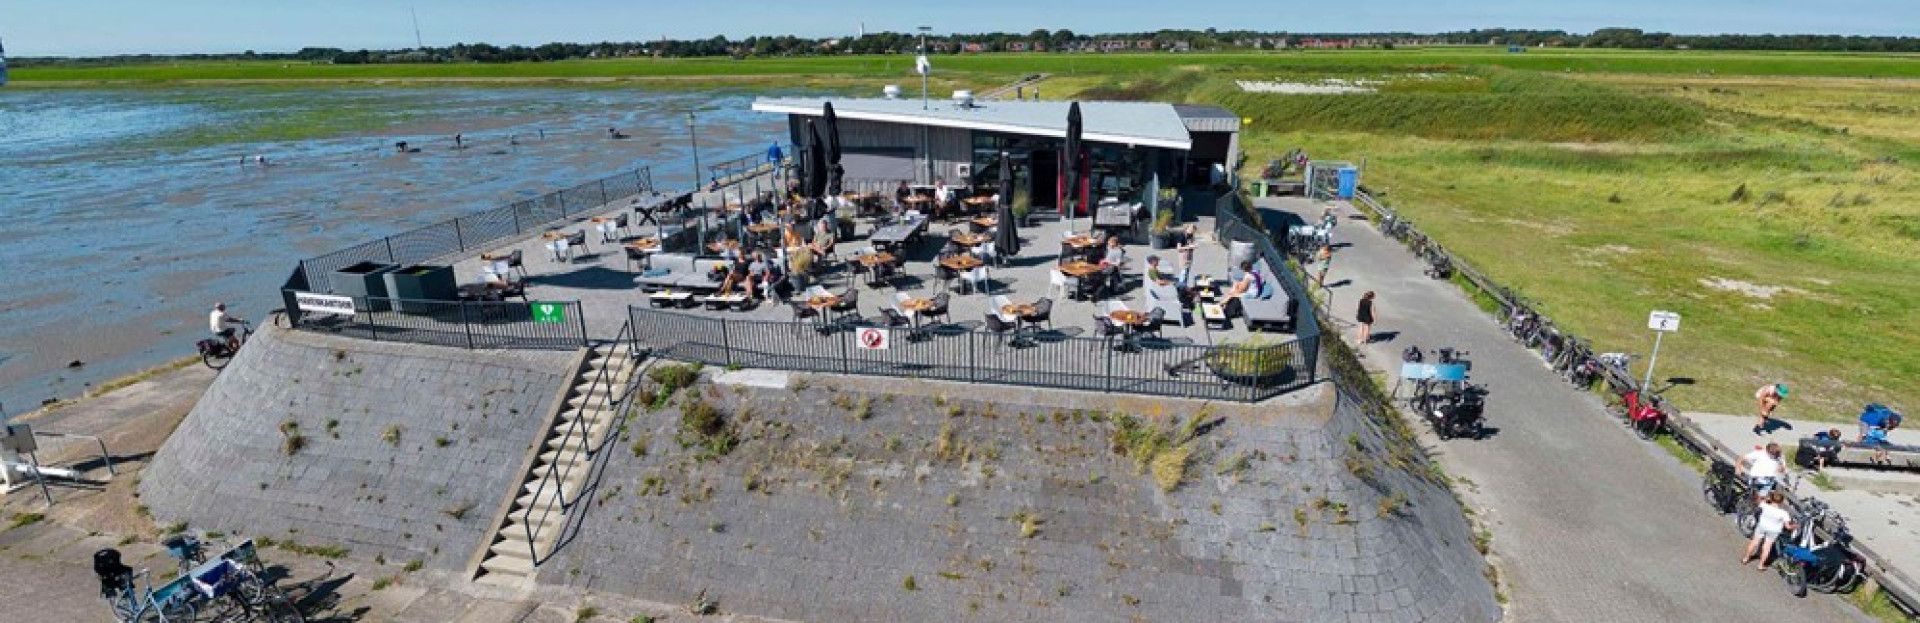 Jachthaven en restaurant Wad Anderz Schiermonnikoog